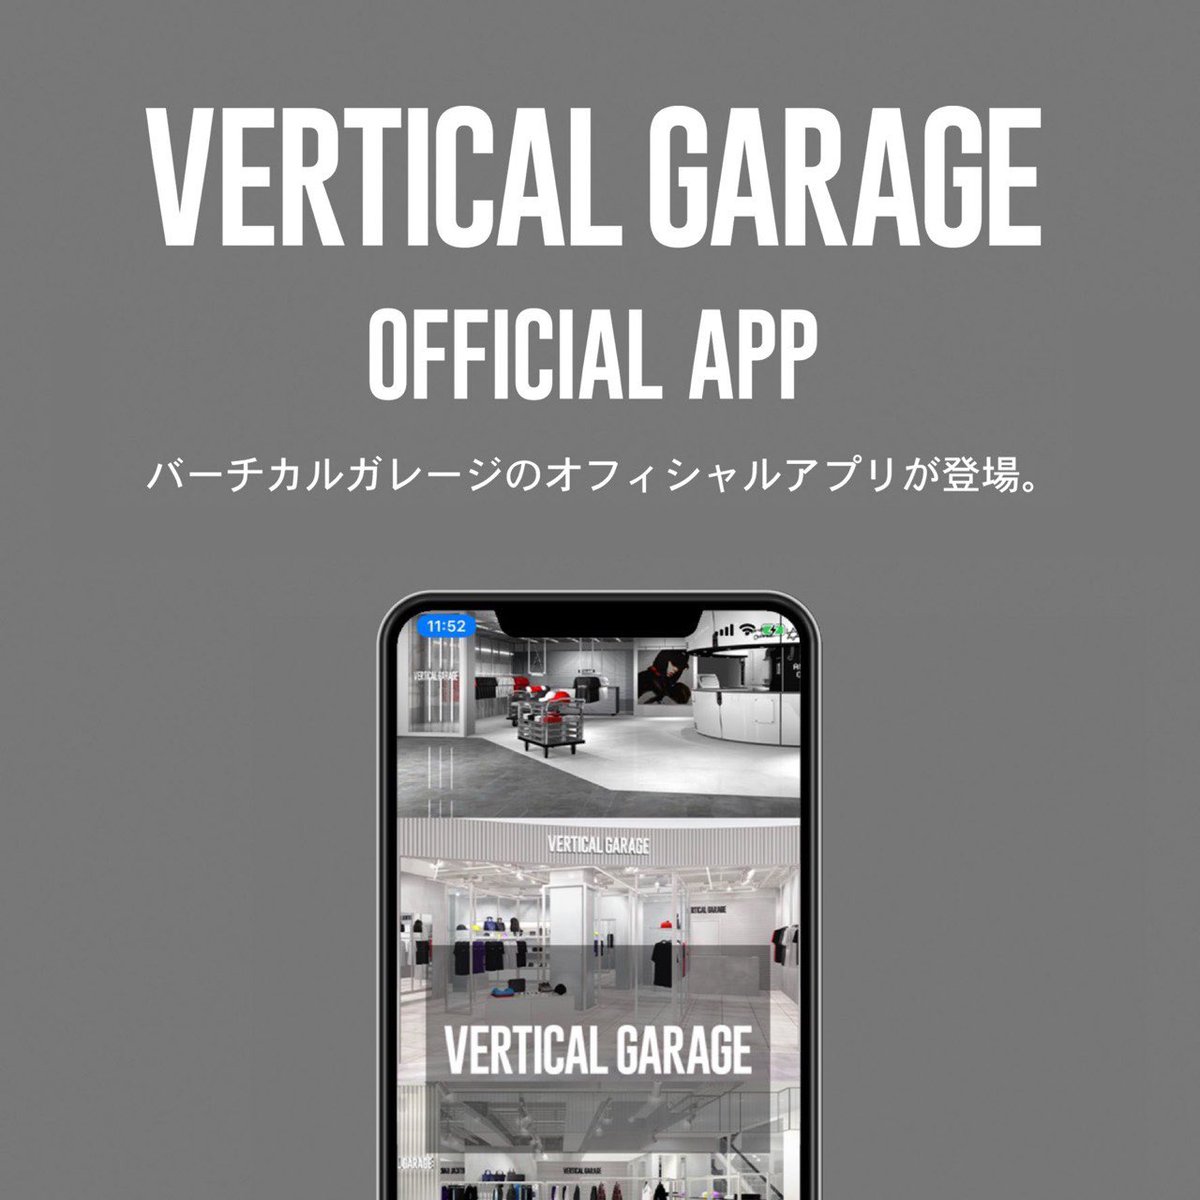 J S B Official على تويتر Vertical Garage App J S B 24karats Pkcz等を取り扱うvertical Garageより ポイント機能付きvertical Garage公式アプリが登場 ダウンロードしていただくとアプリ限定のオリジナル壁紙 オリジナルフォトフレームをプレゼント